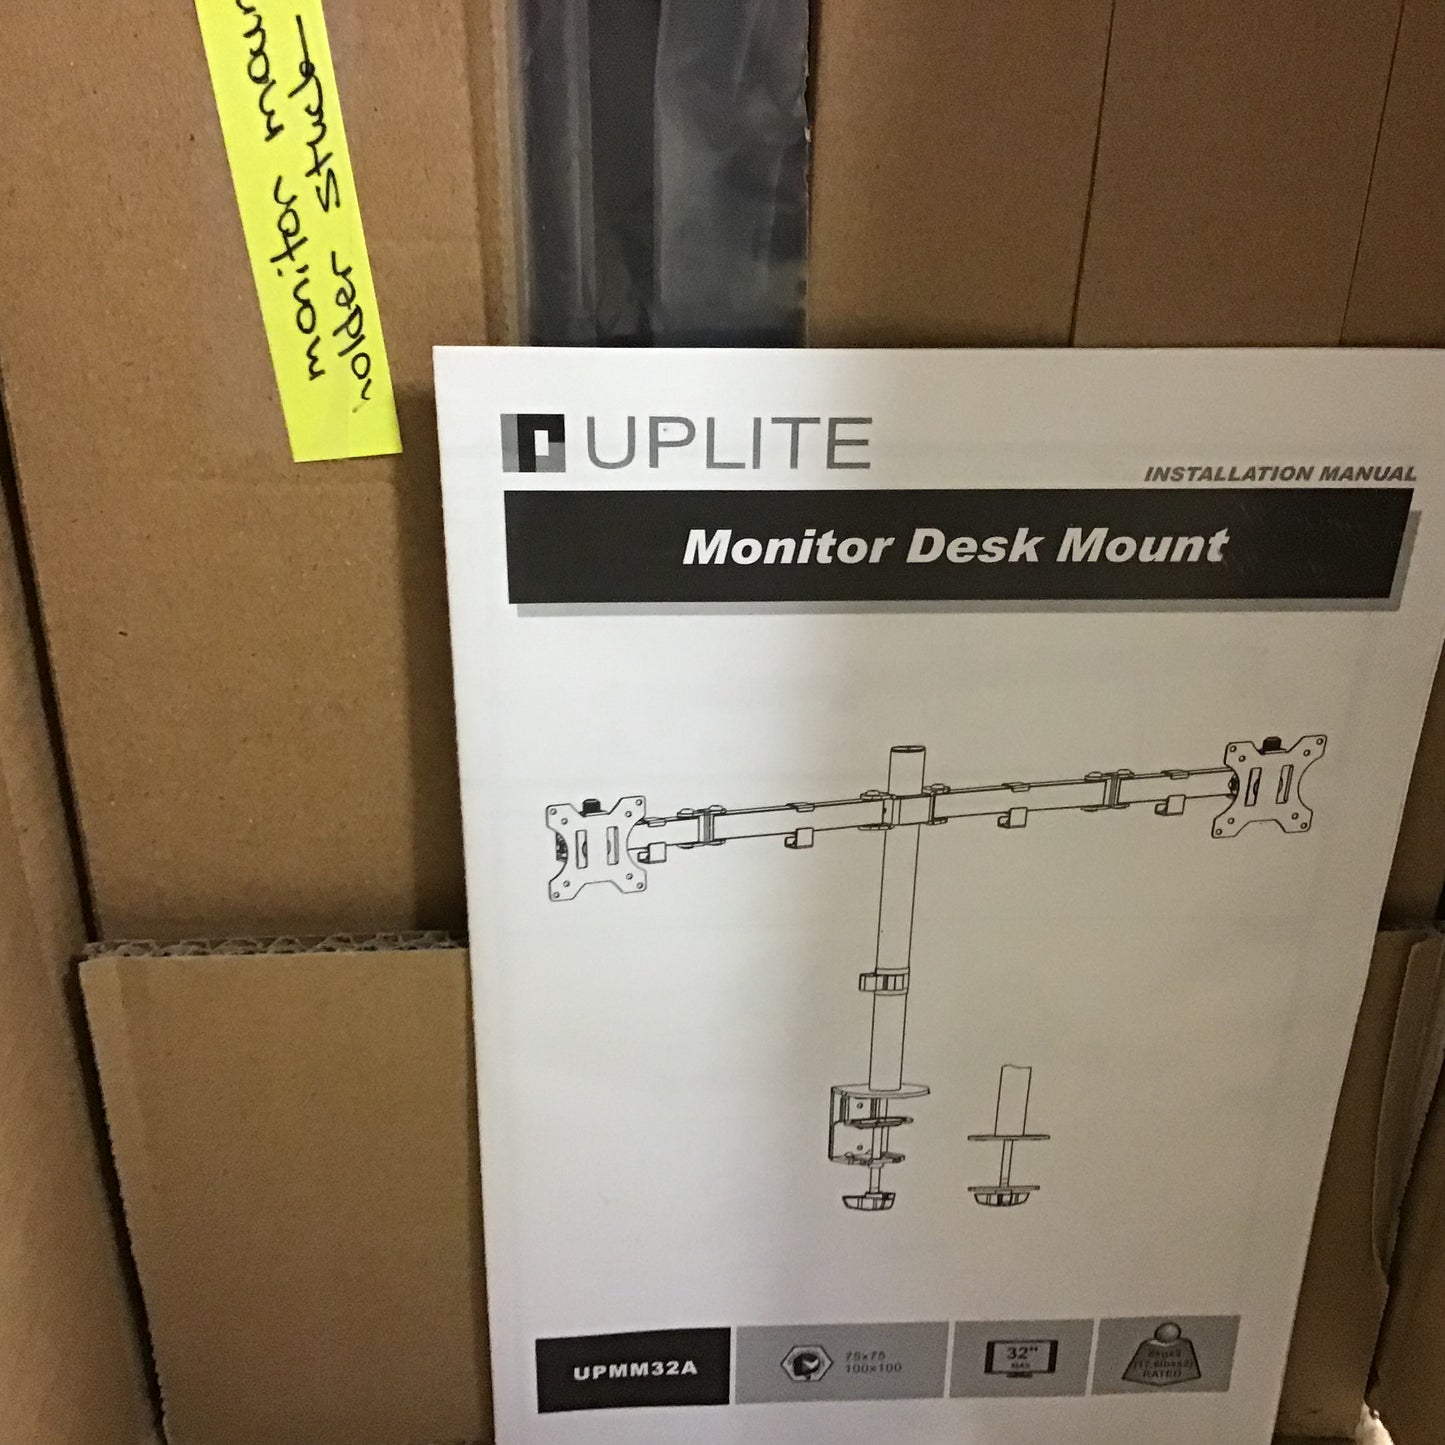 Uplite Dual LCD Monitor Desk Mount